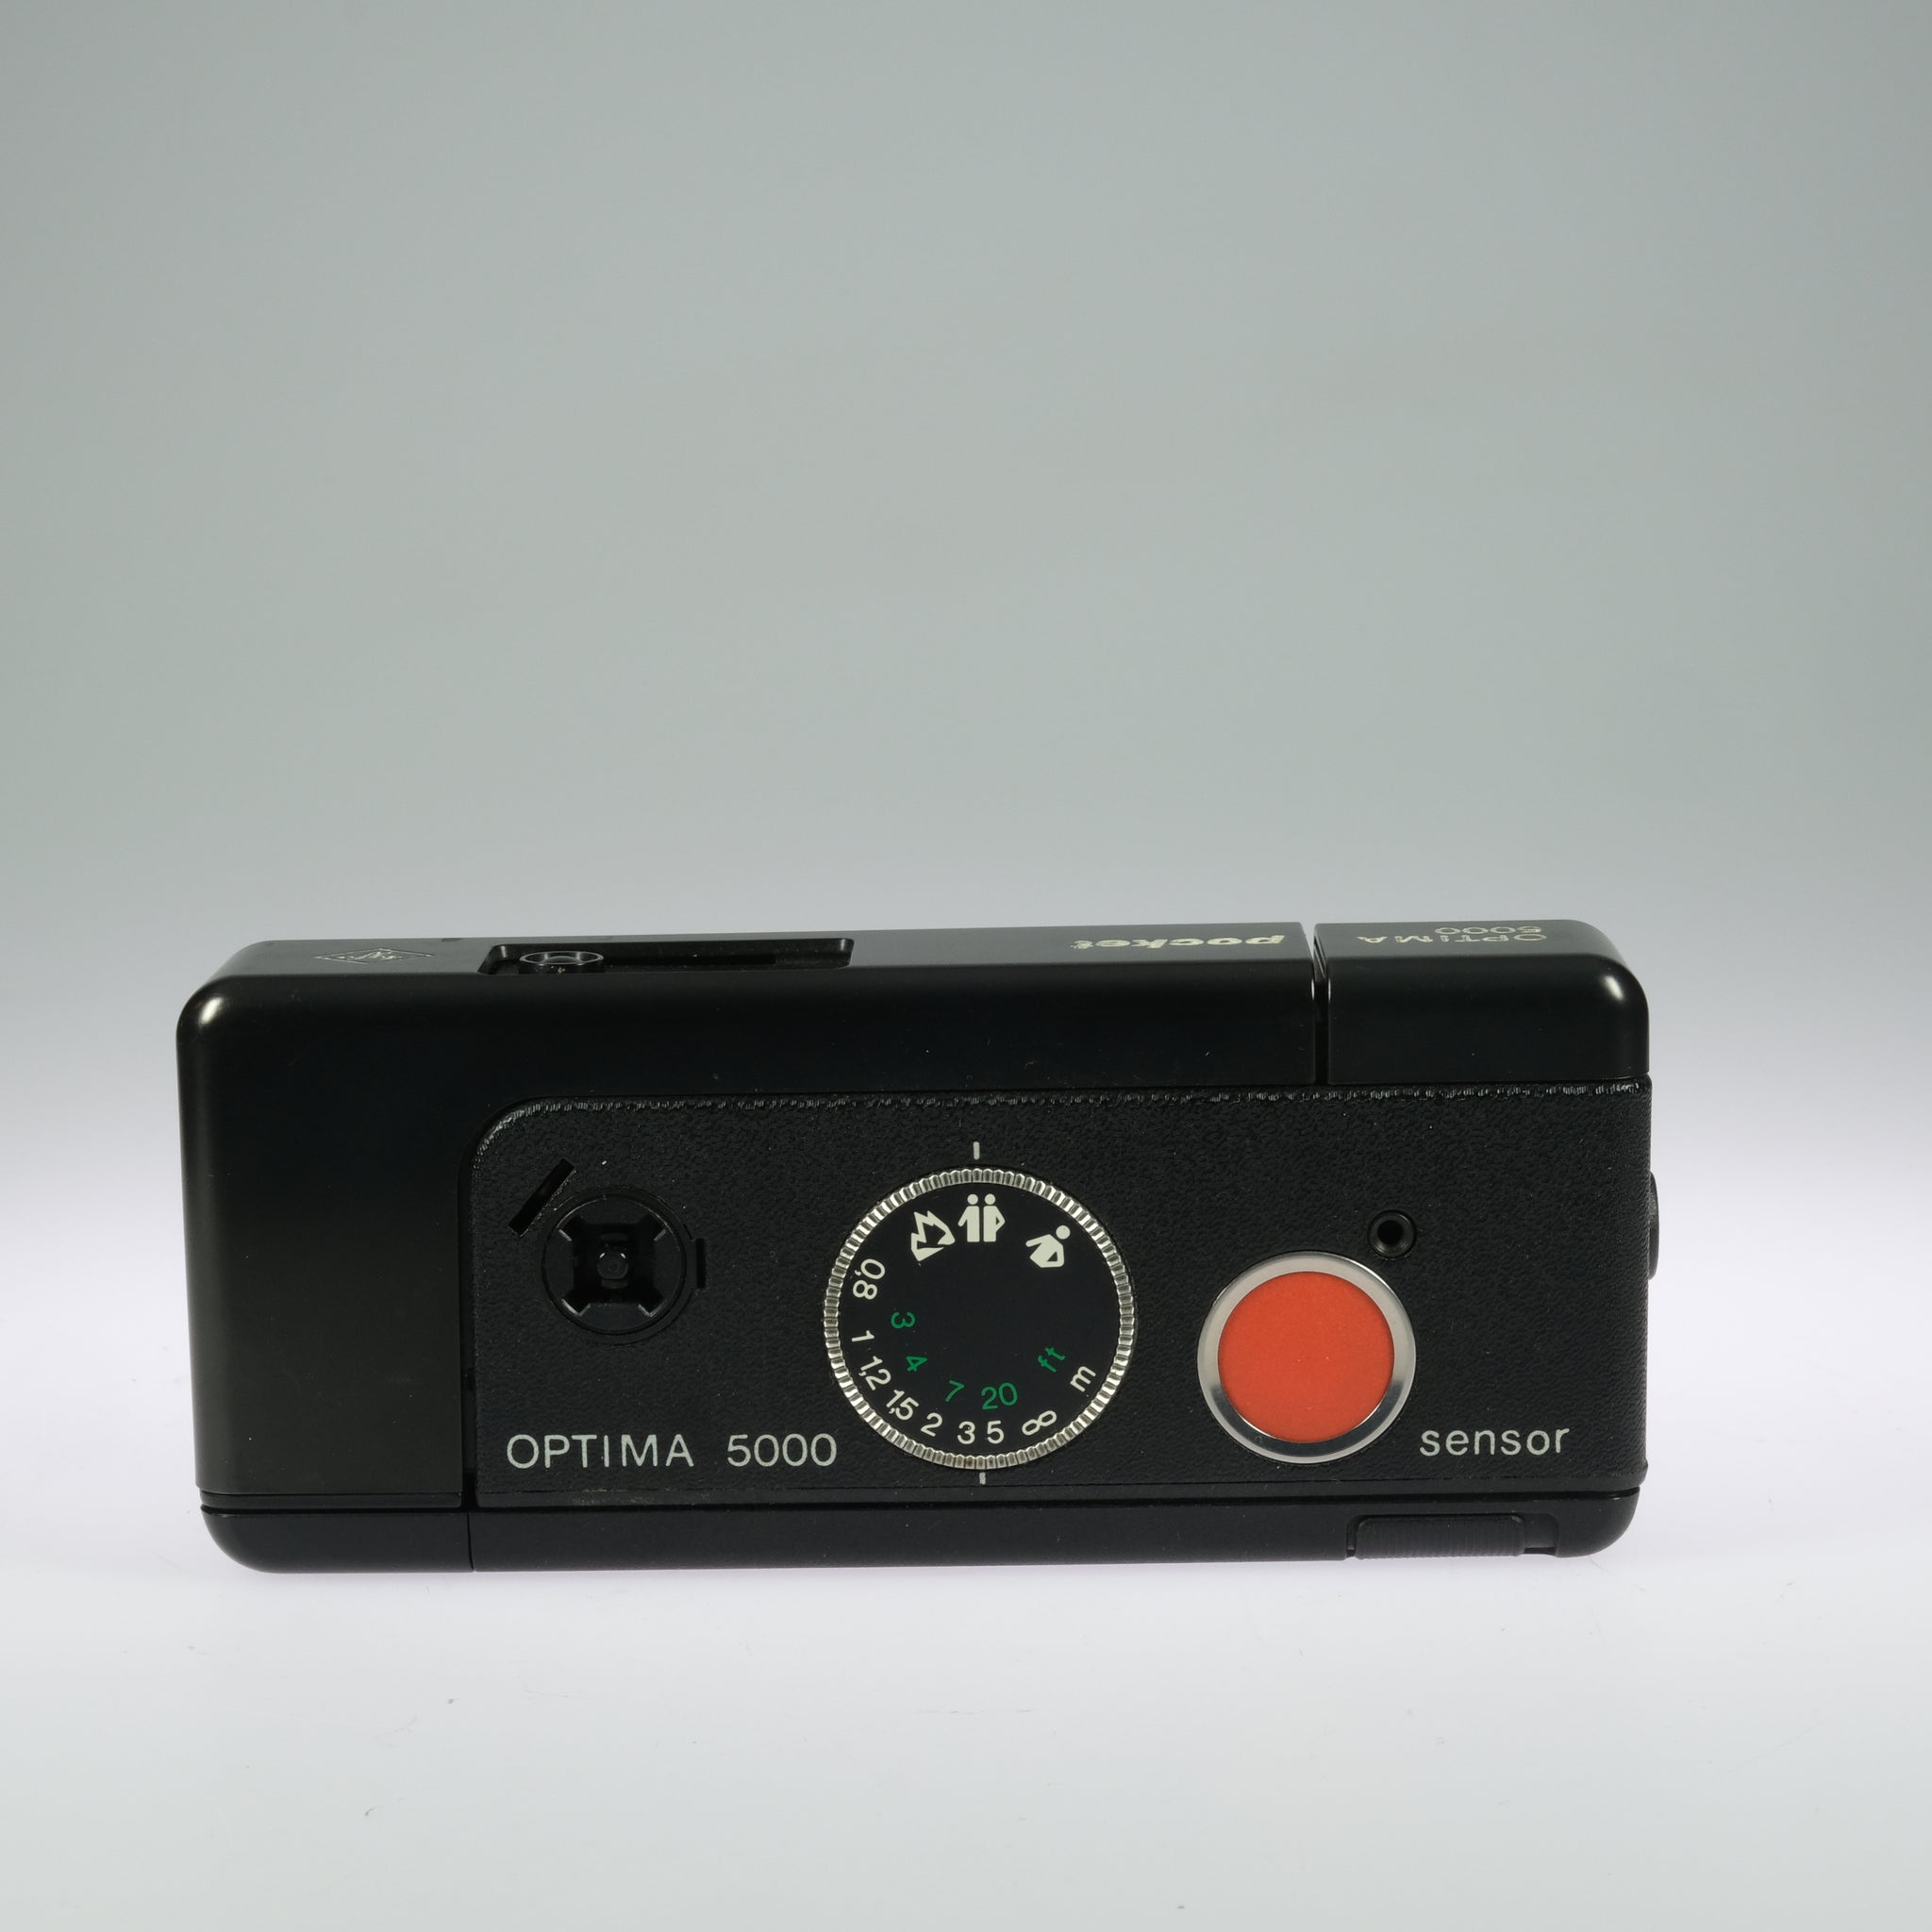 AGFA OPTIMA 5000 pocket sensor